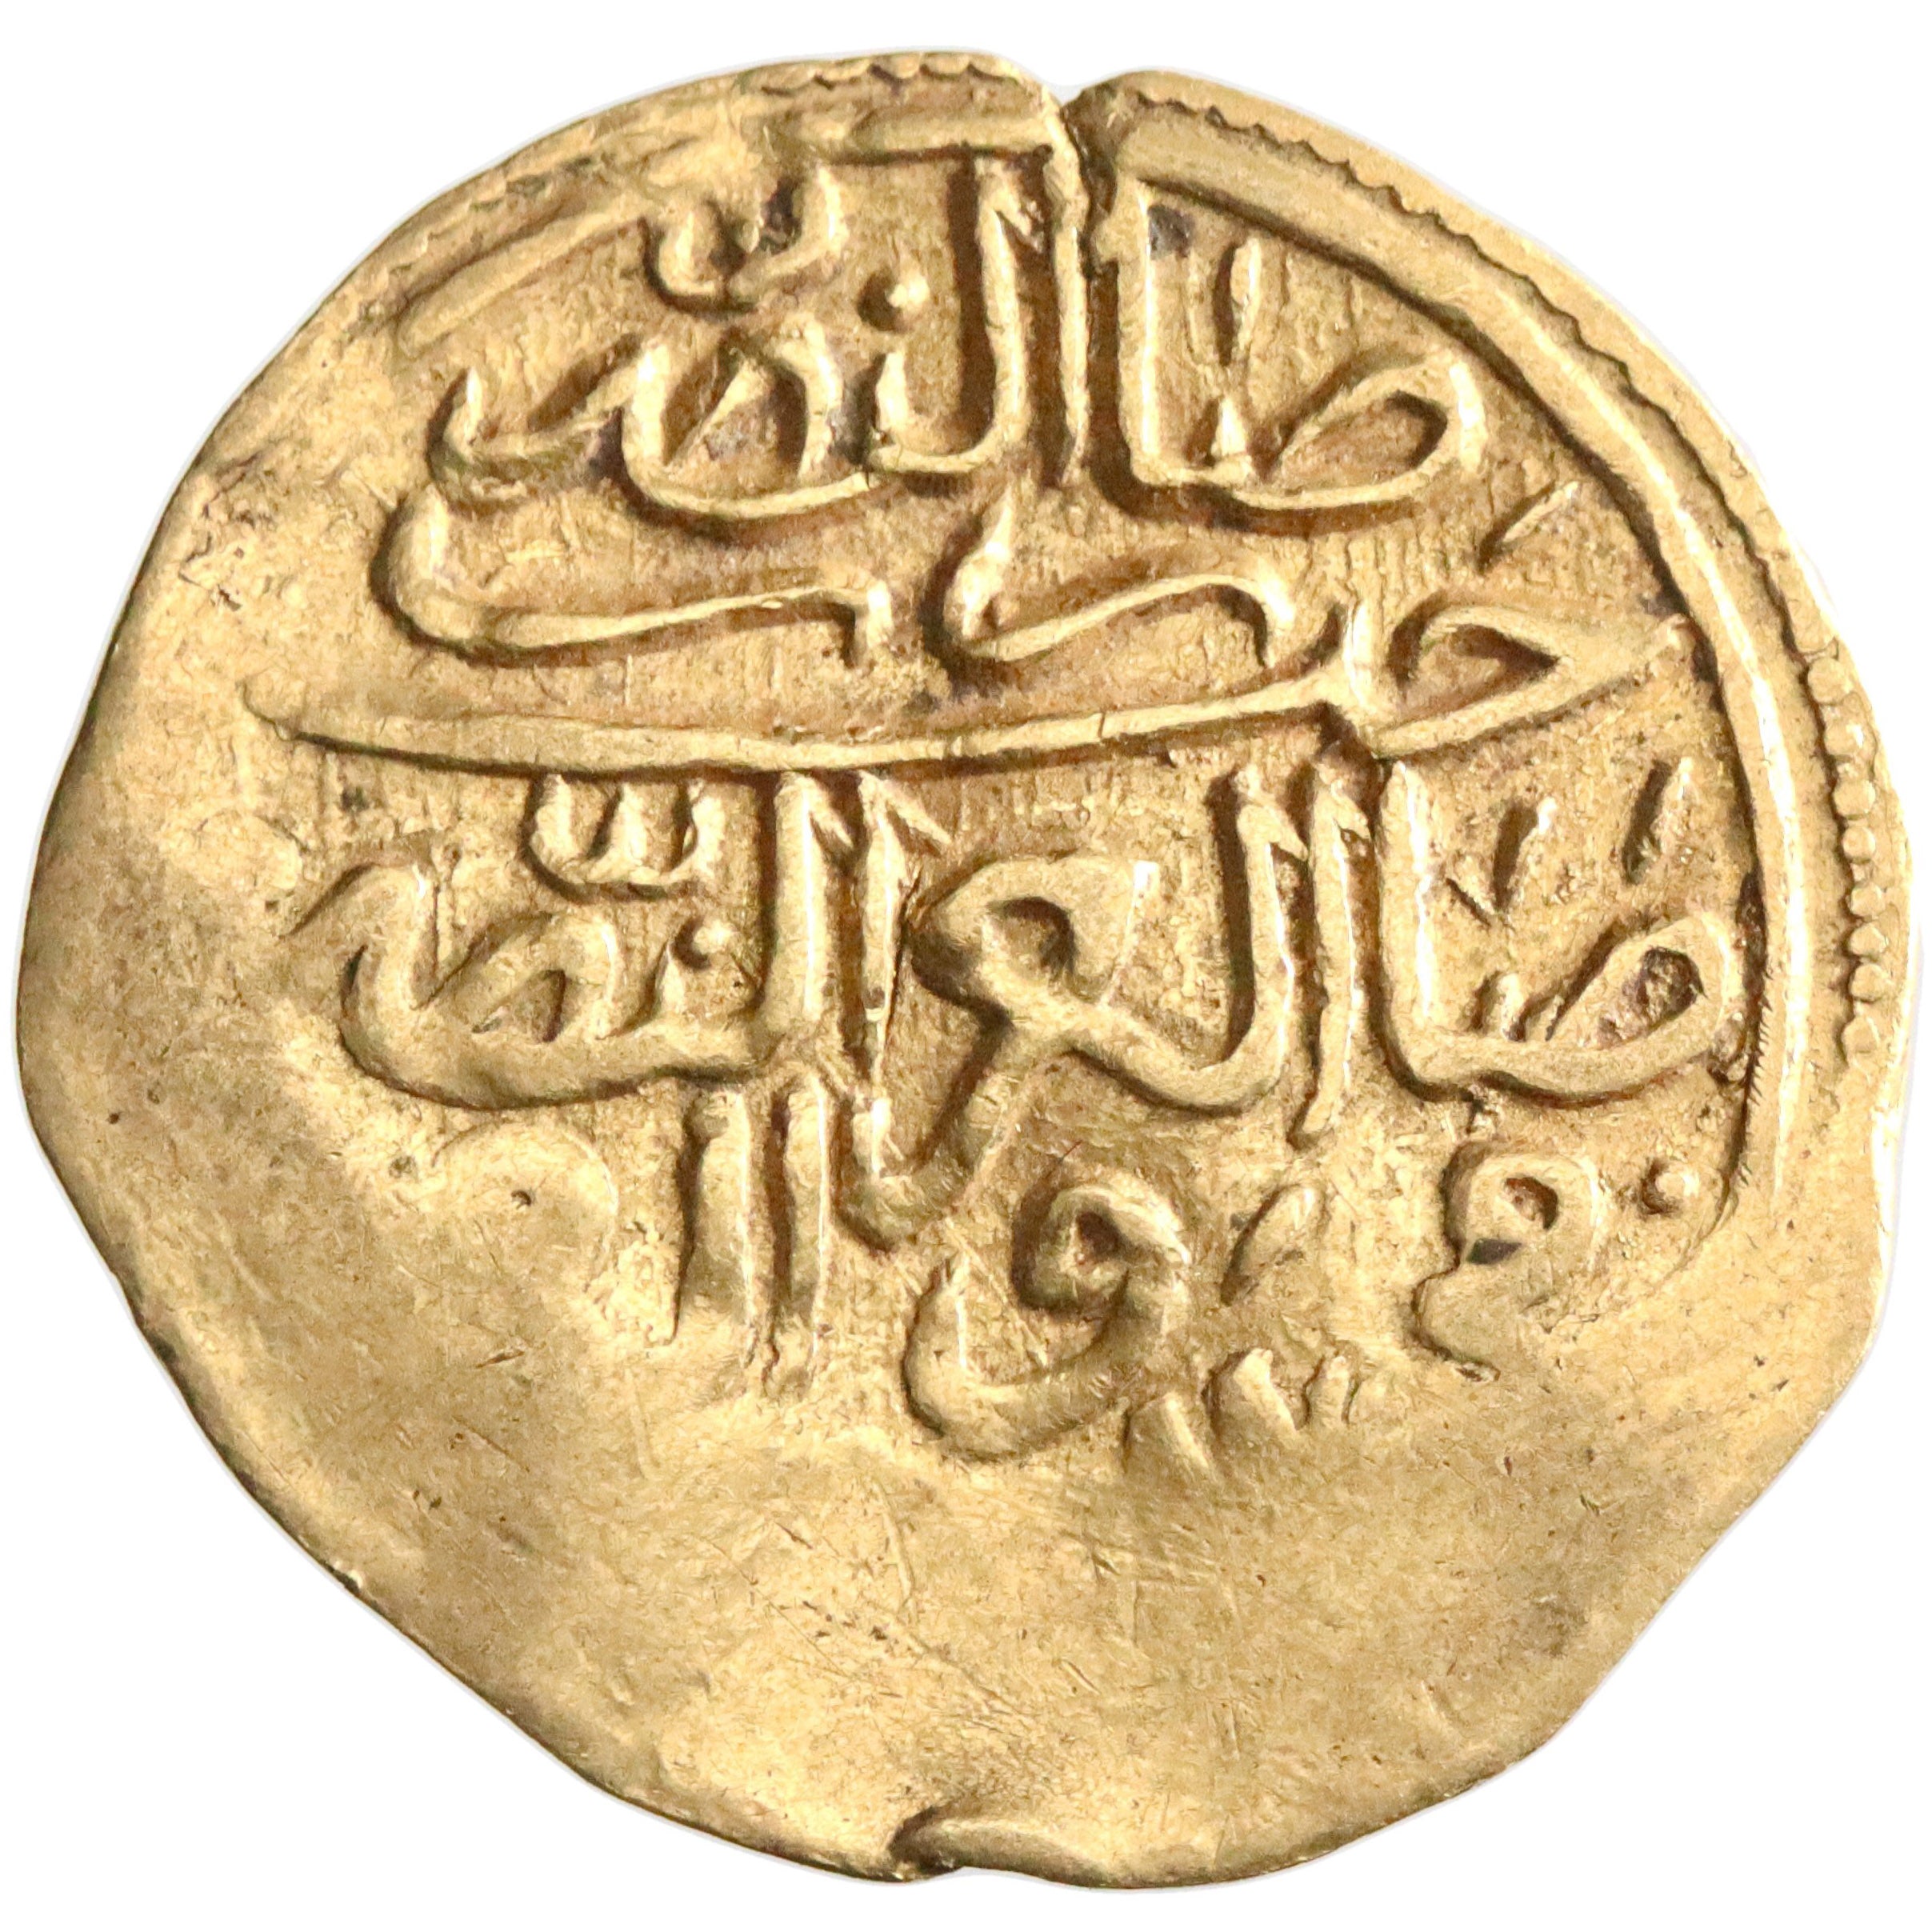 Ottoman, Ahmed I, gold sultani, Kostantiniye (Constantinople) mint, AH 1012